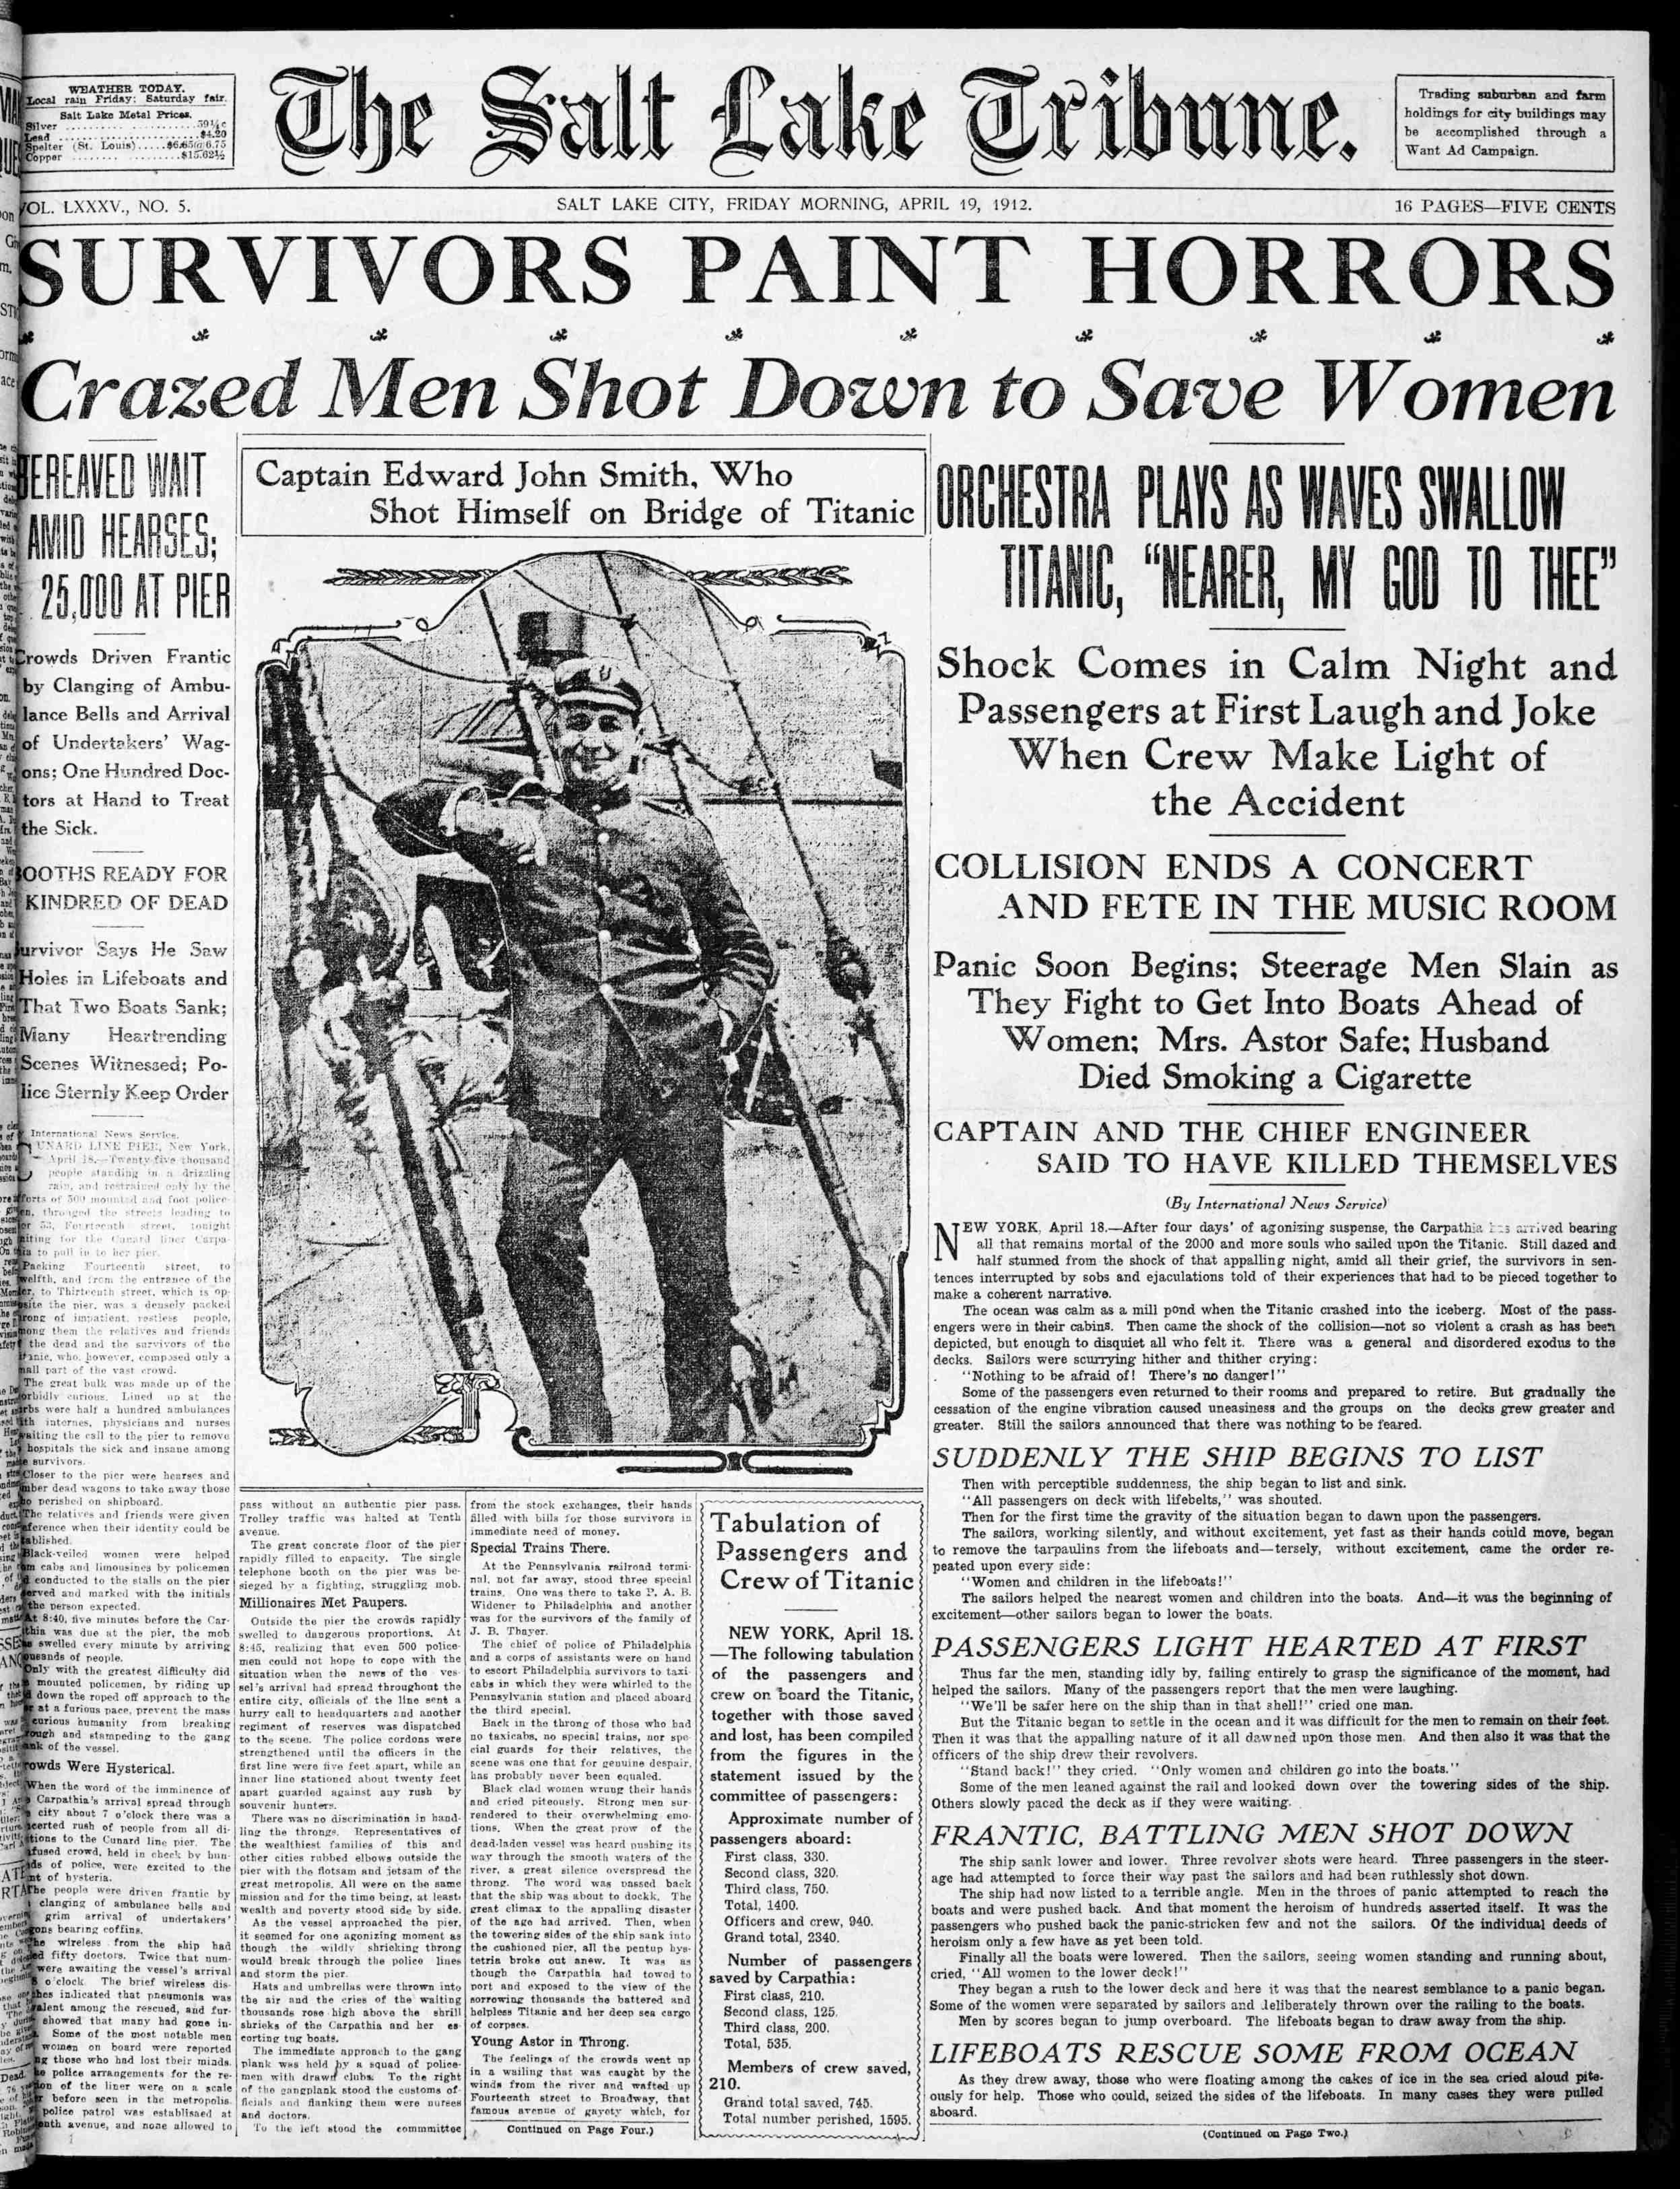 The Salt Lake Tribune. (Salt Lake City, Utah),  April 19, 1912. Front page news: The sinking of the Titanic.